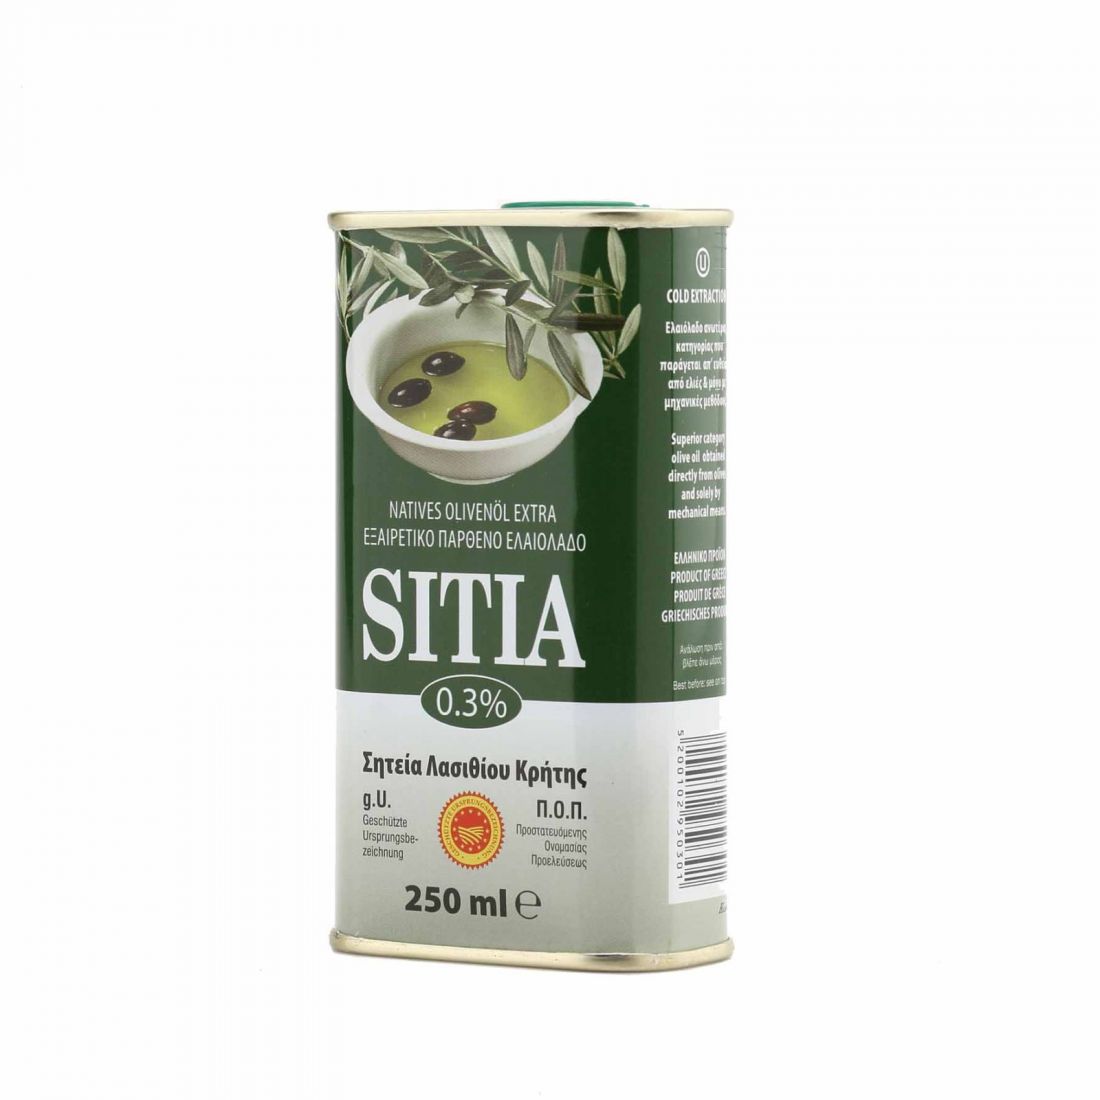 Оливковое масло SITIA - 250 мл 0.3 экстра вирджин PDO